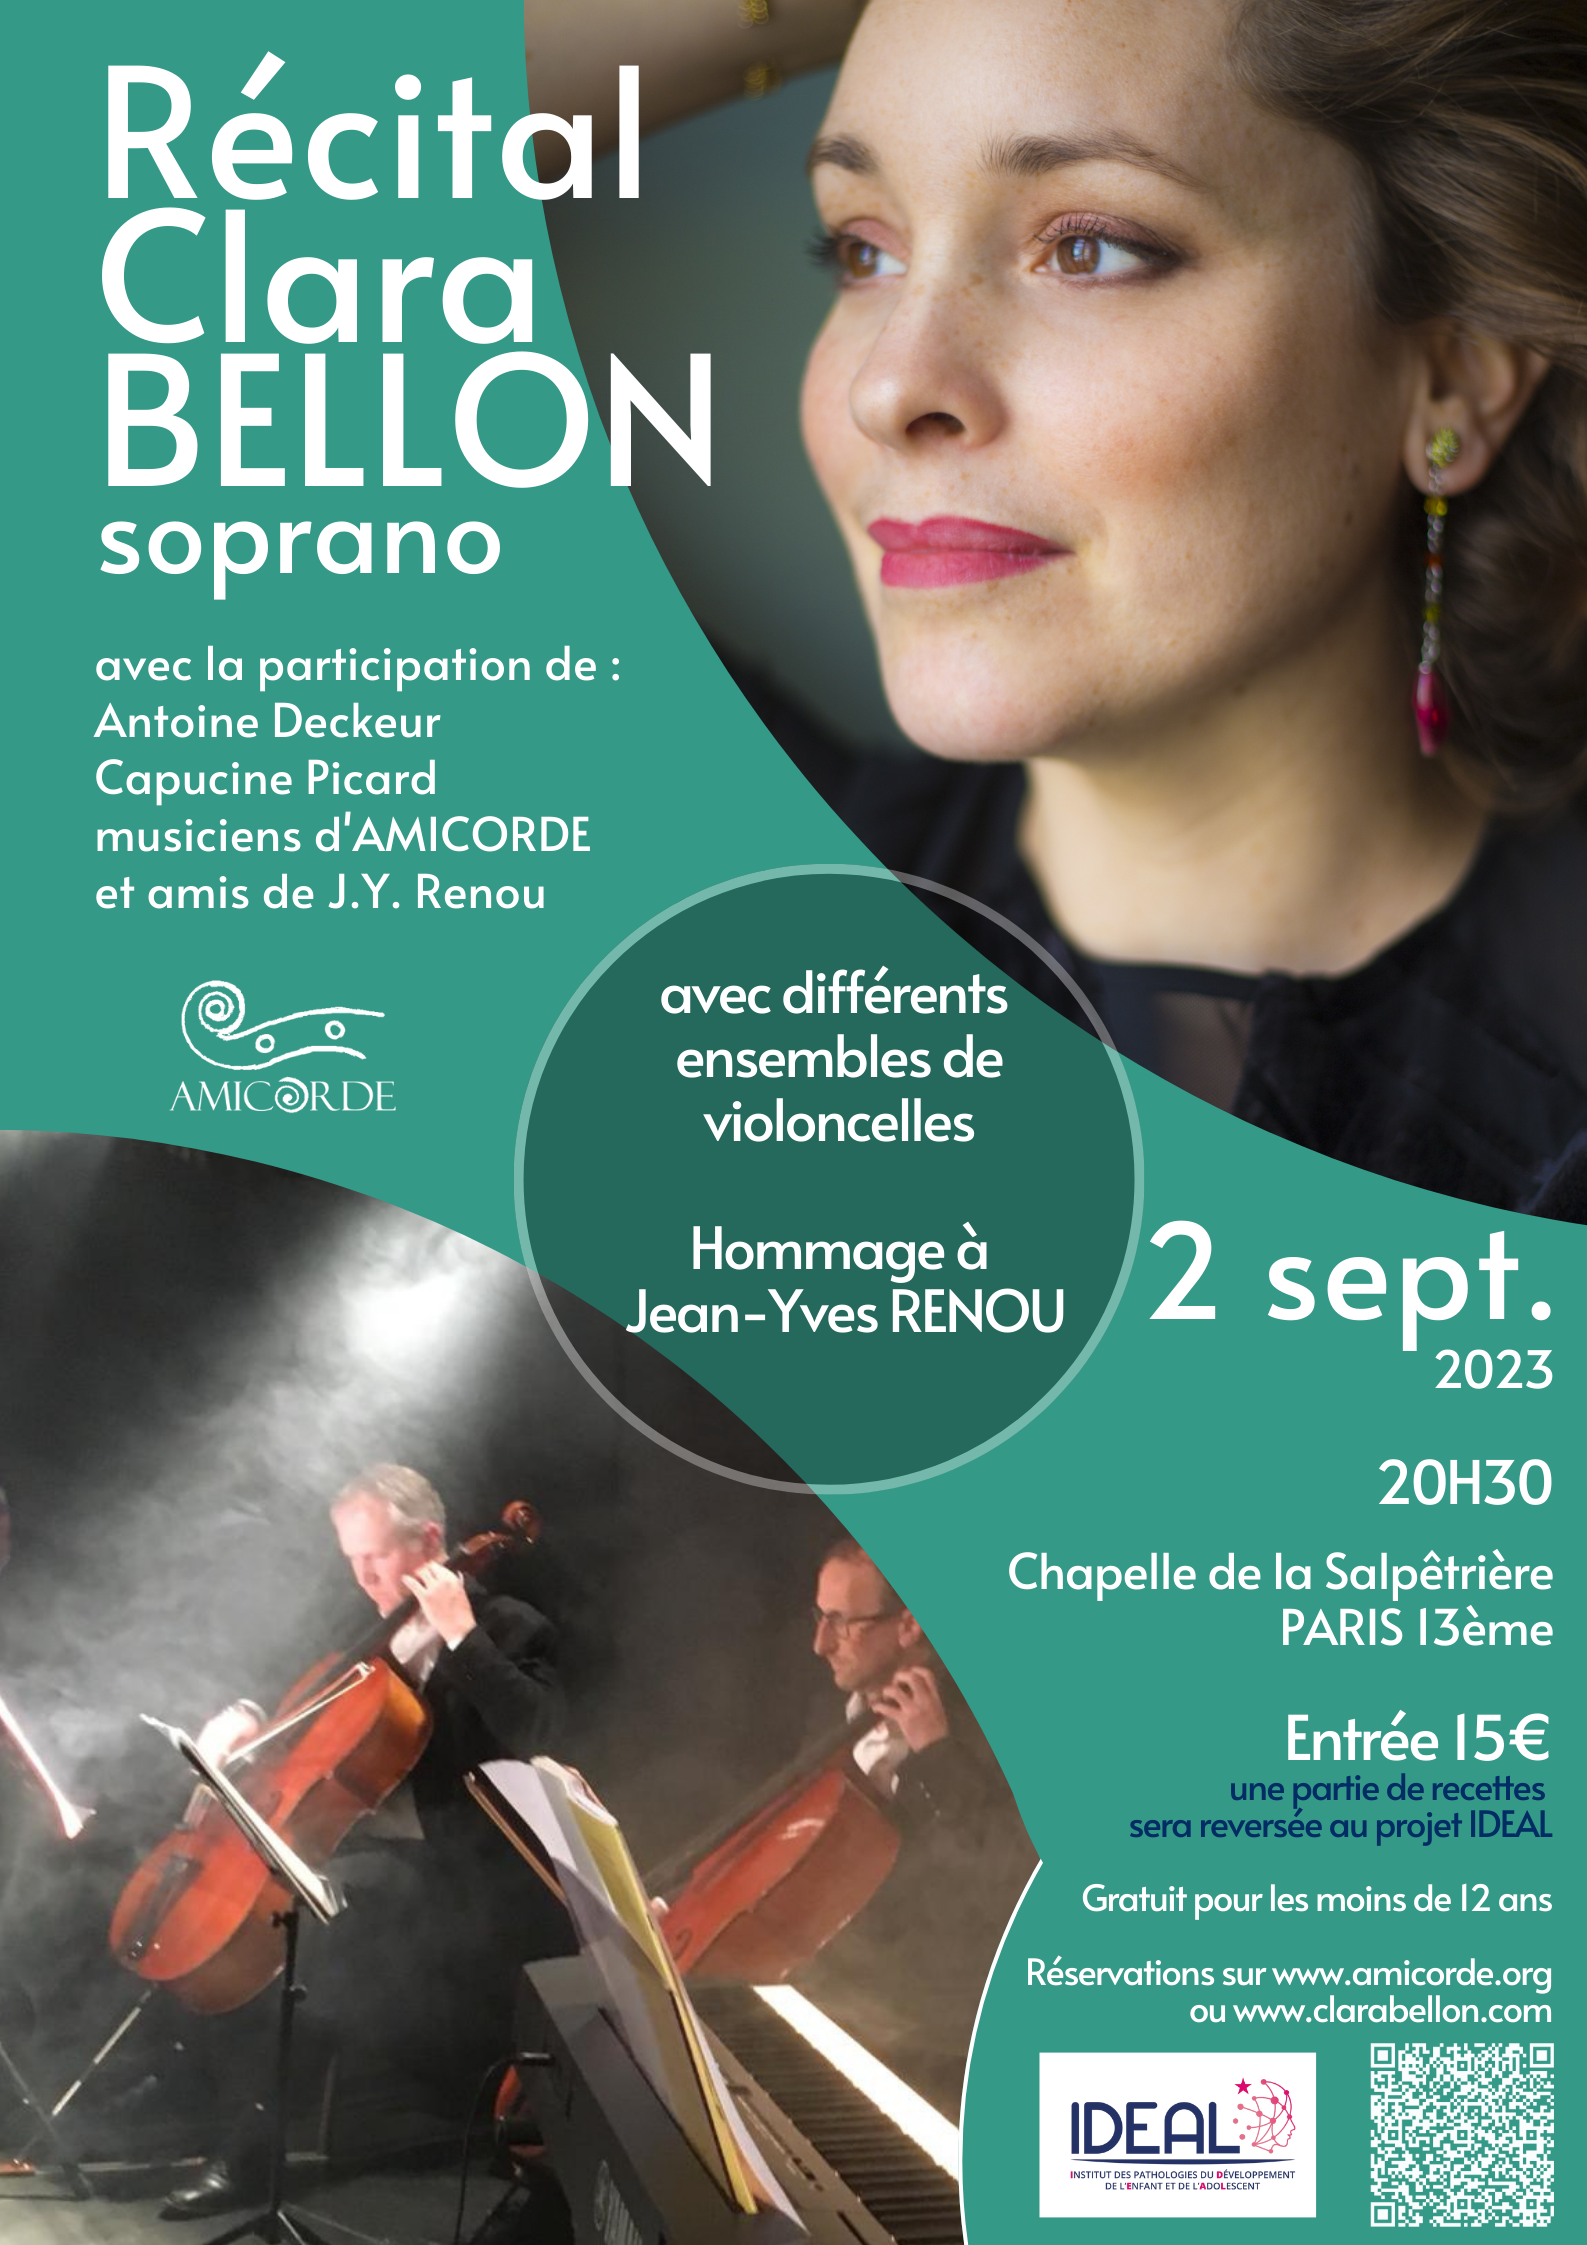 Recital Clara Bellon Paris 2 septembre 2023